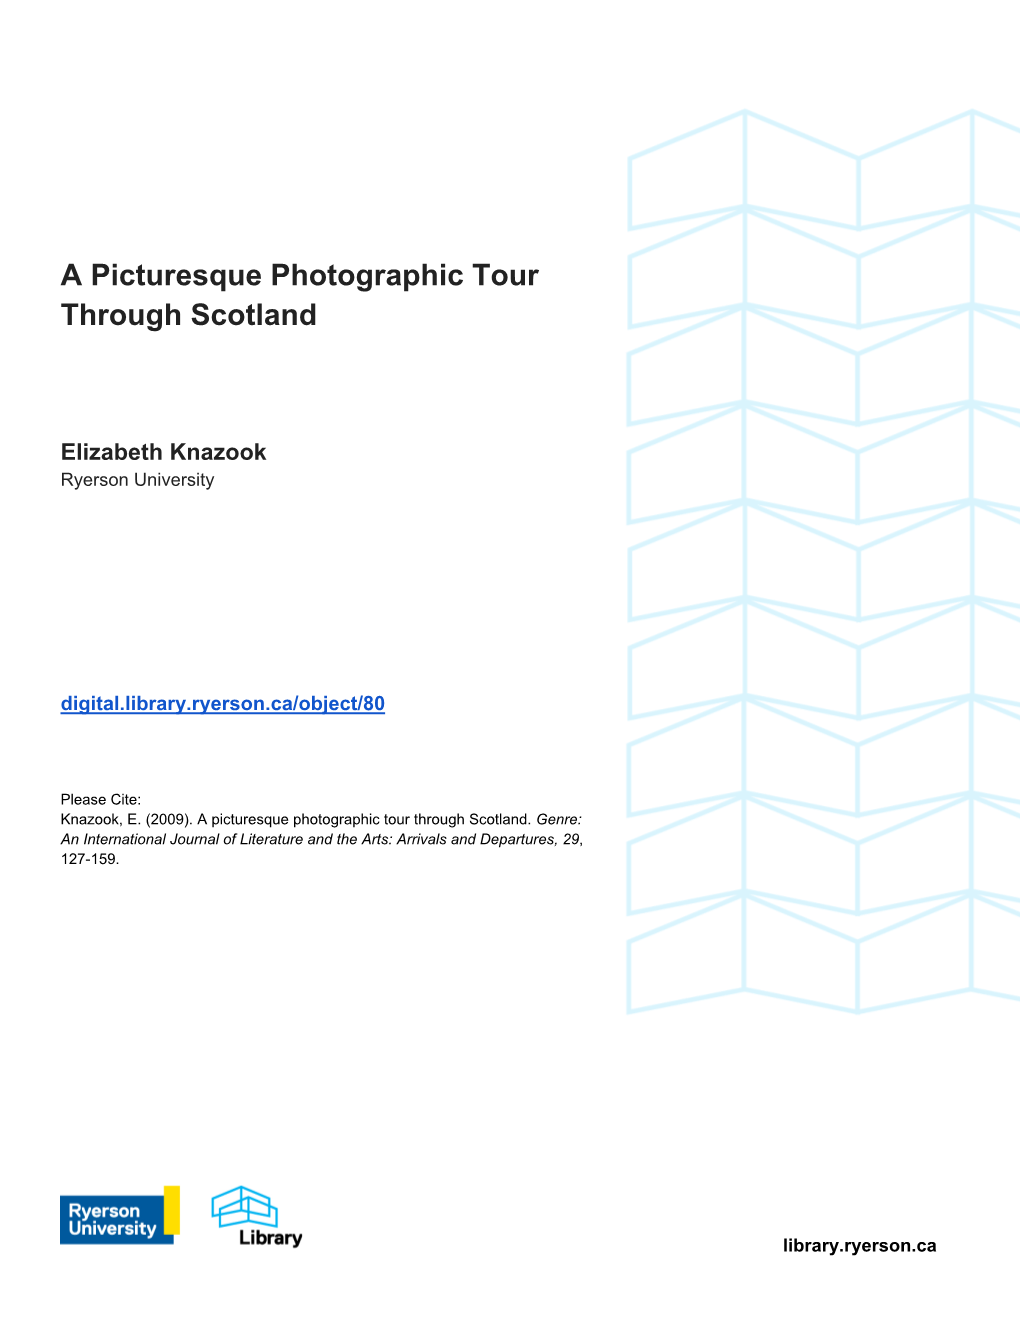 A Picturesque Photographic Tour Through Scotland